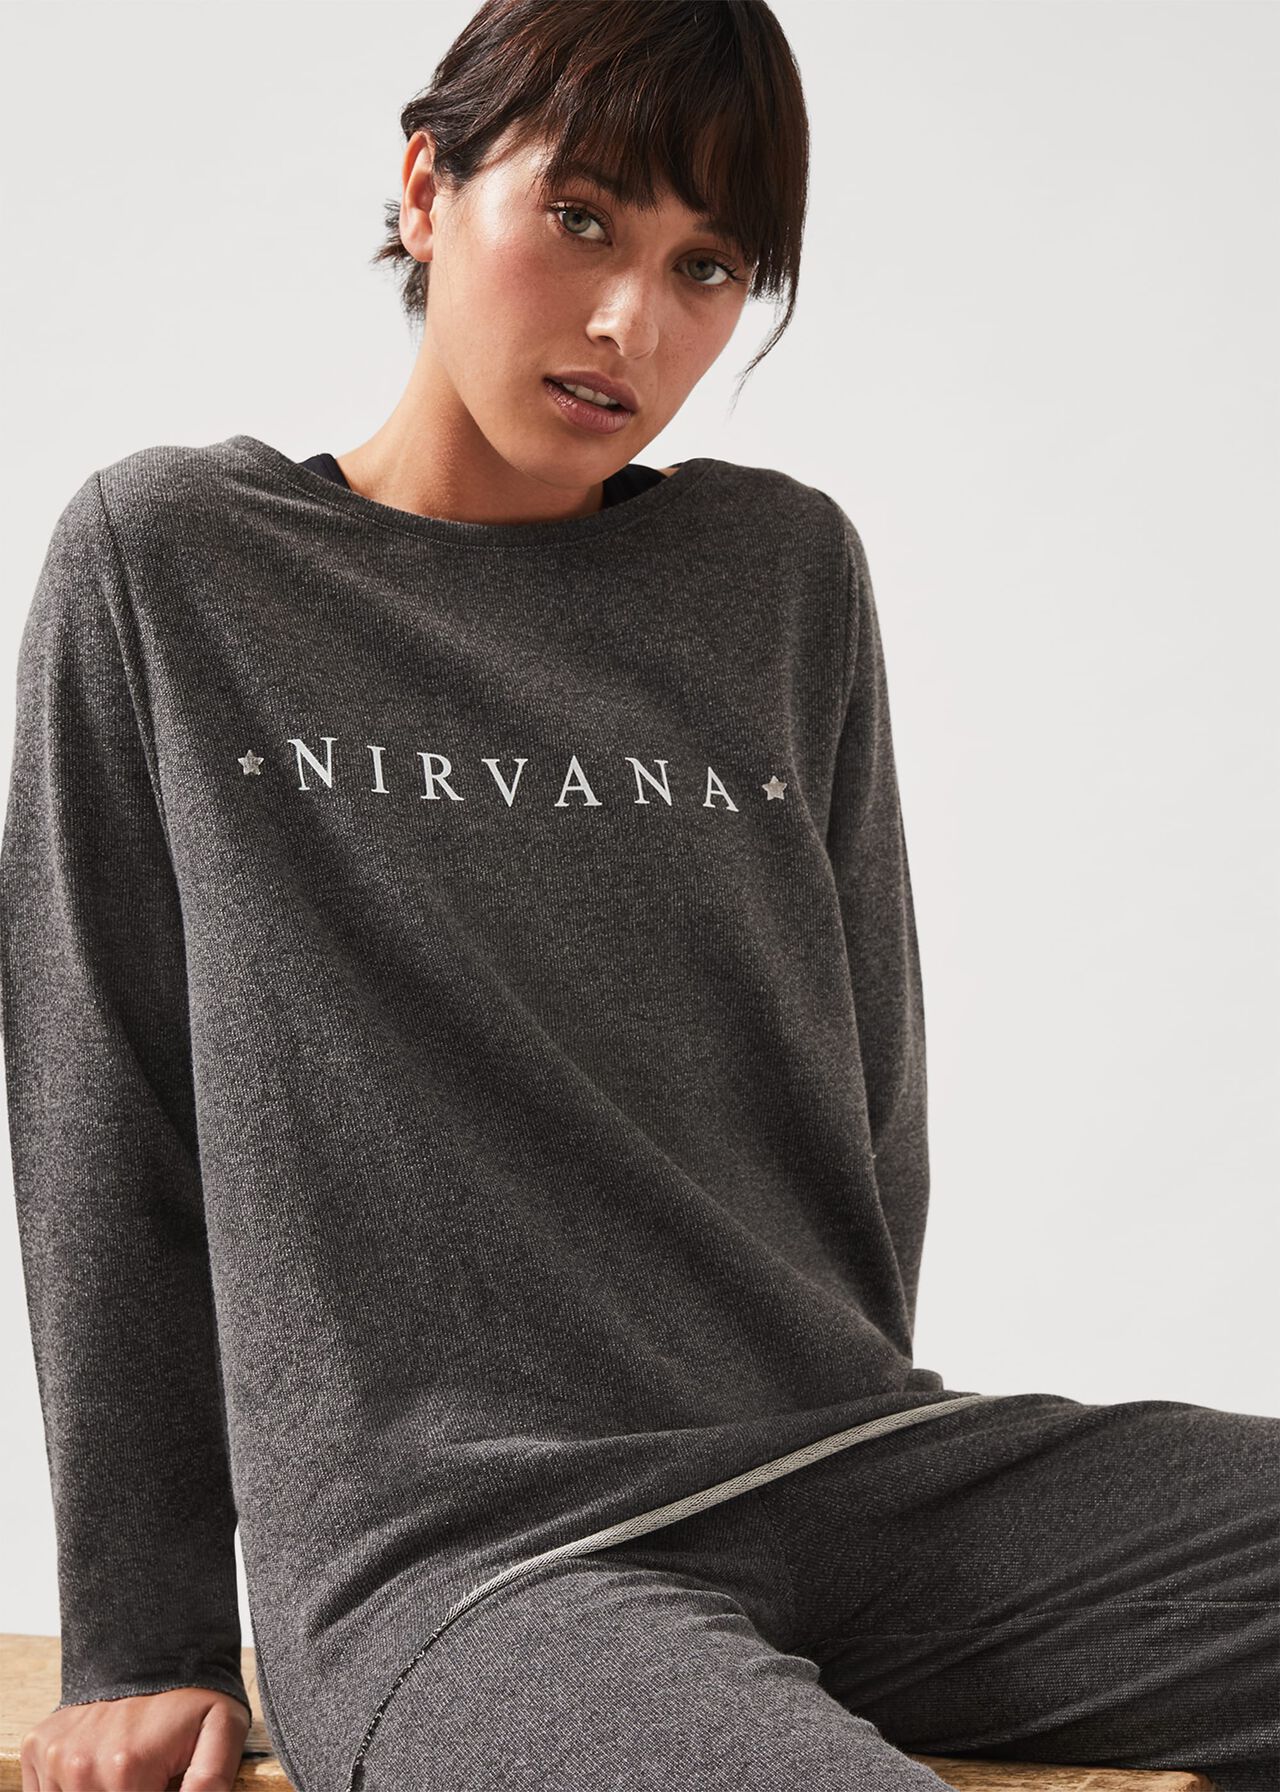 Nirvana Sweat Top